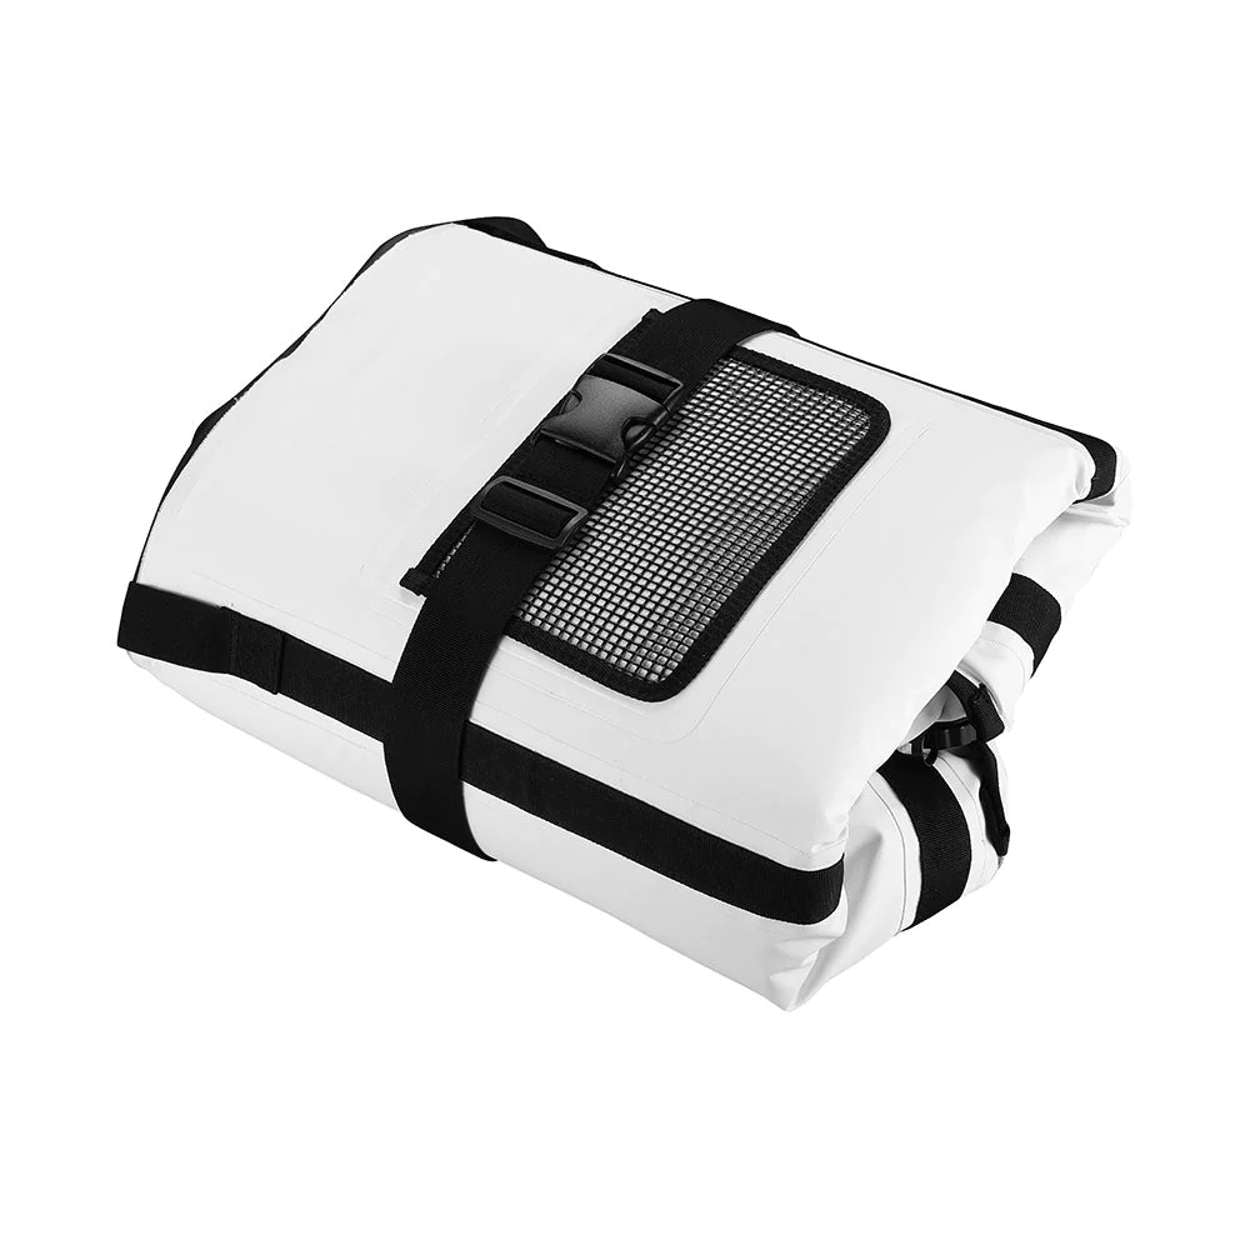 Bakcou Insulated Game-Gear Bags